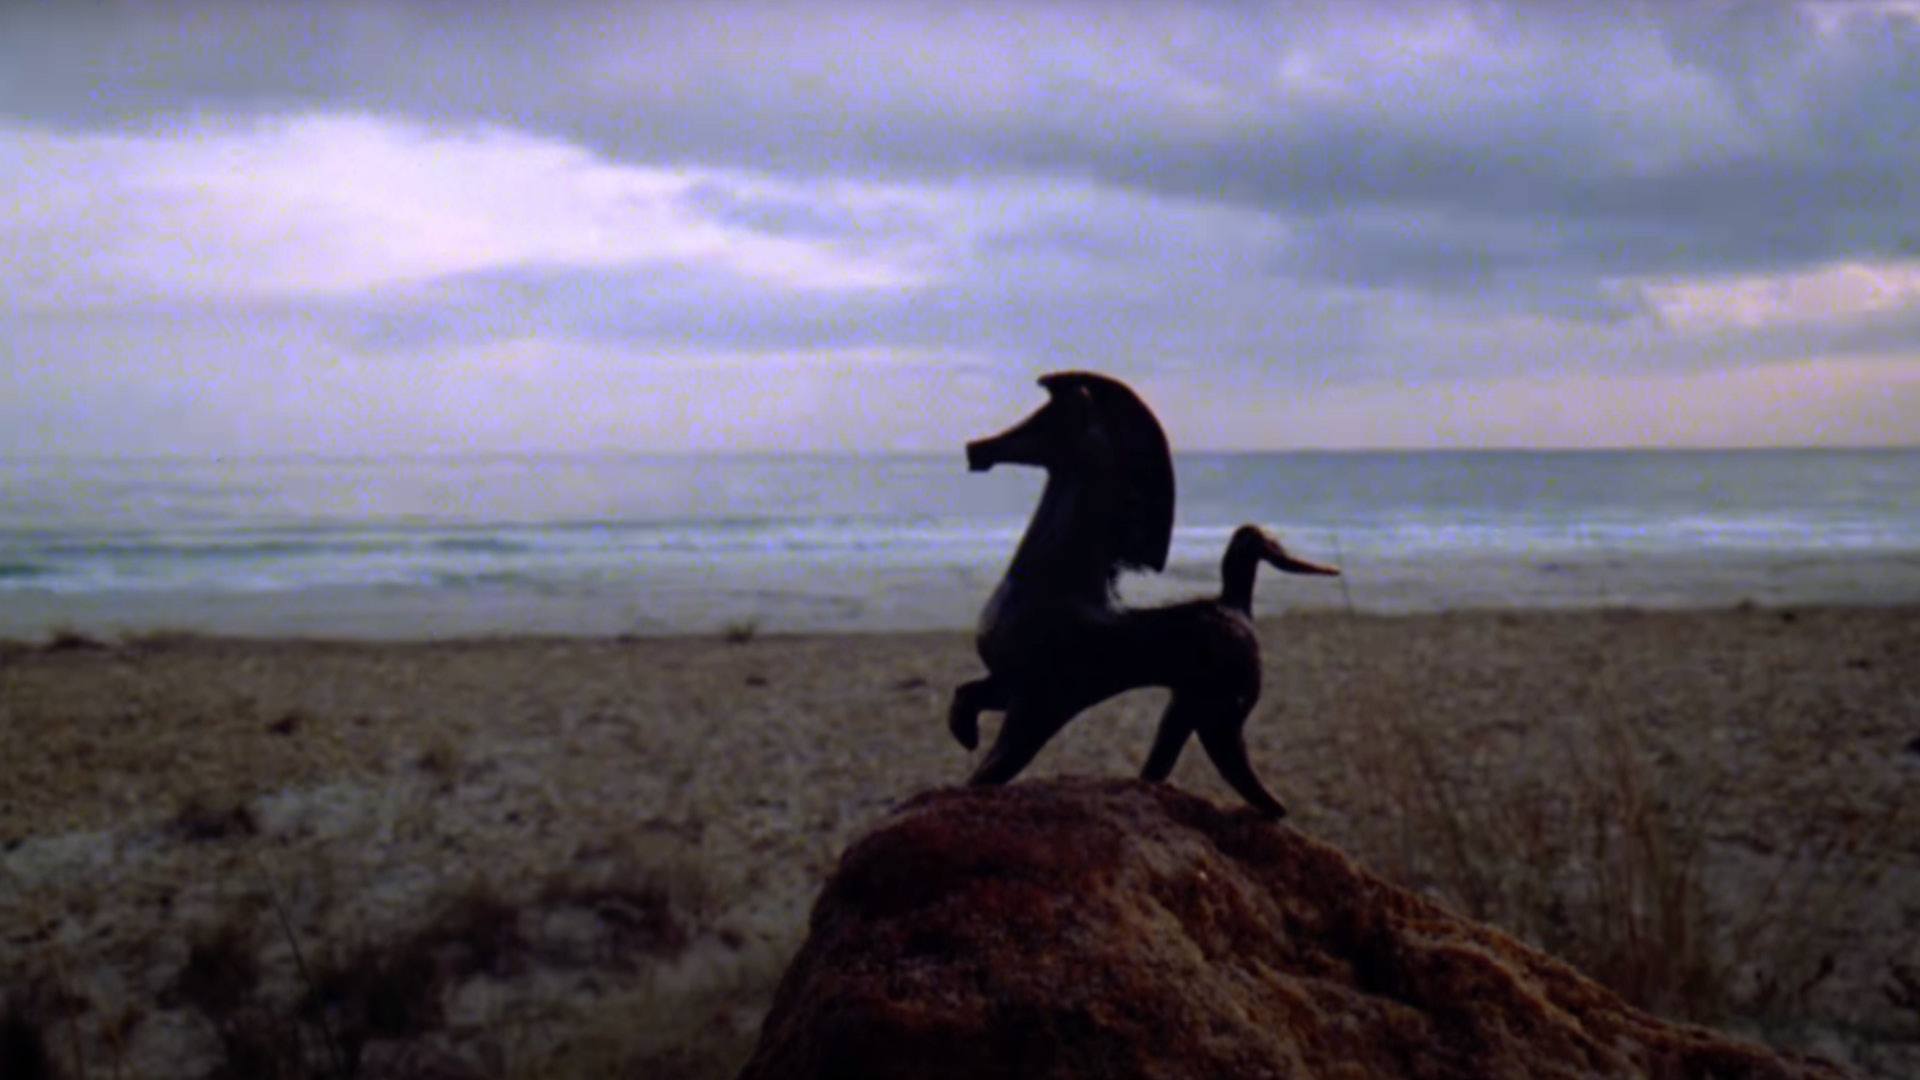 THE BLACK STALLION film still of black horse on a beach